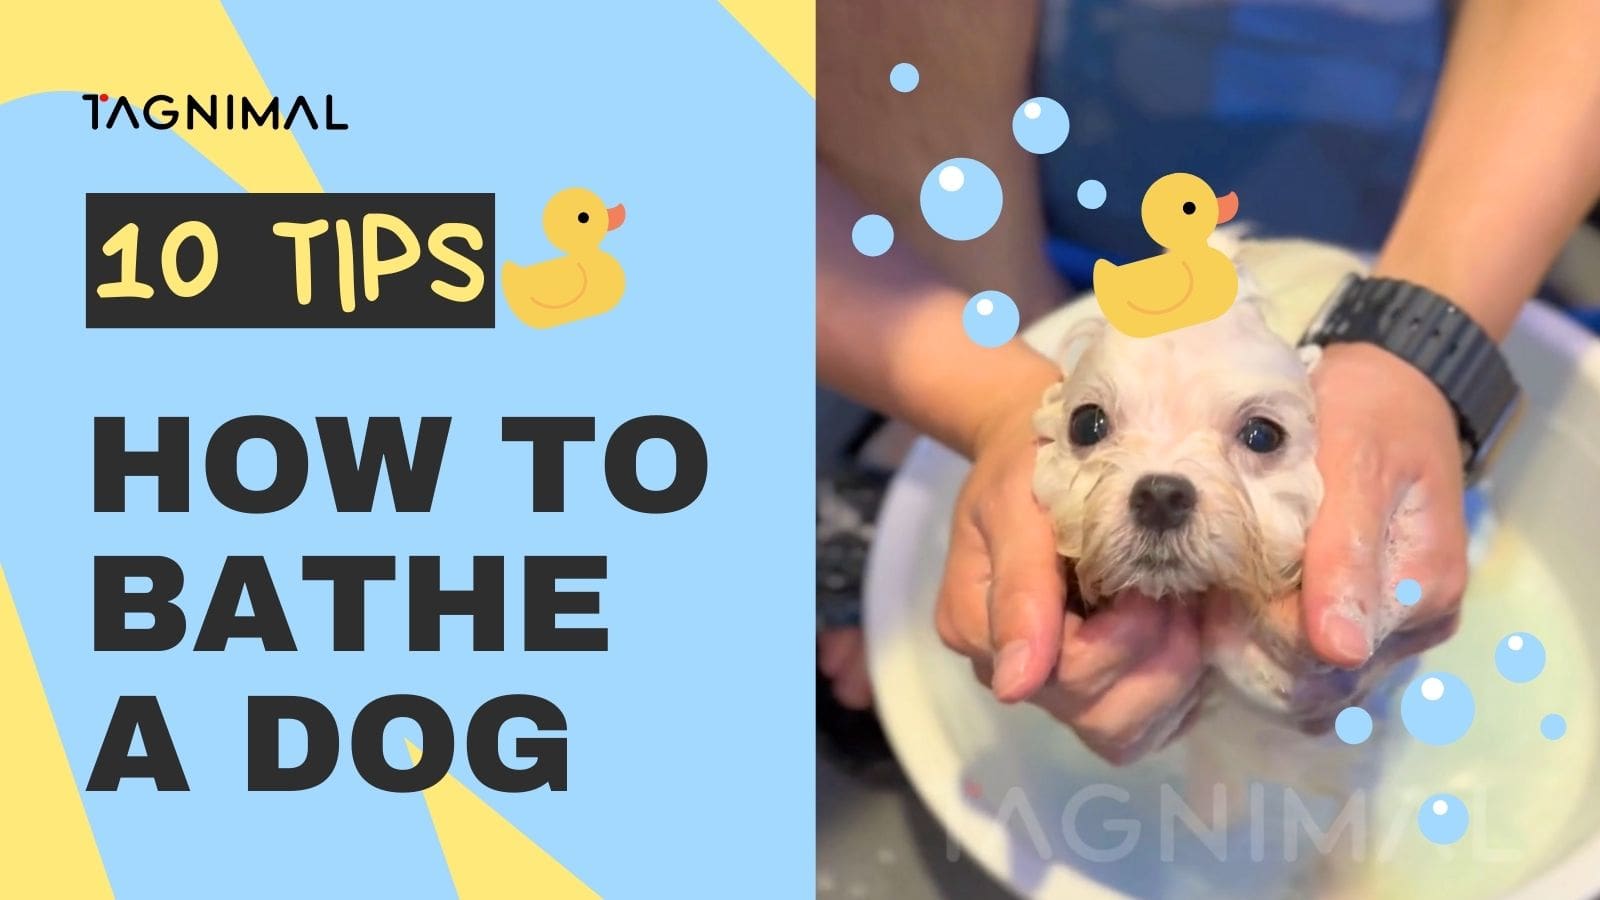 Tagnimal How To Bathe a Dog, dog grooming, bathe service